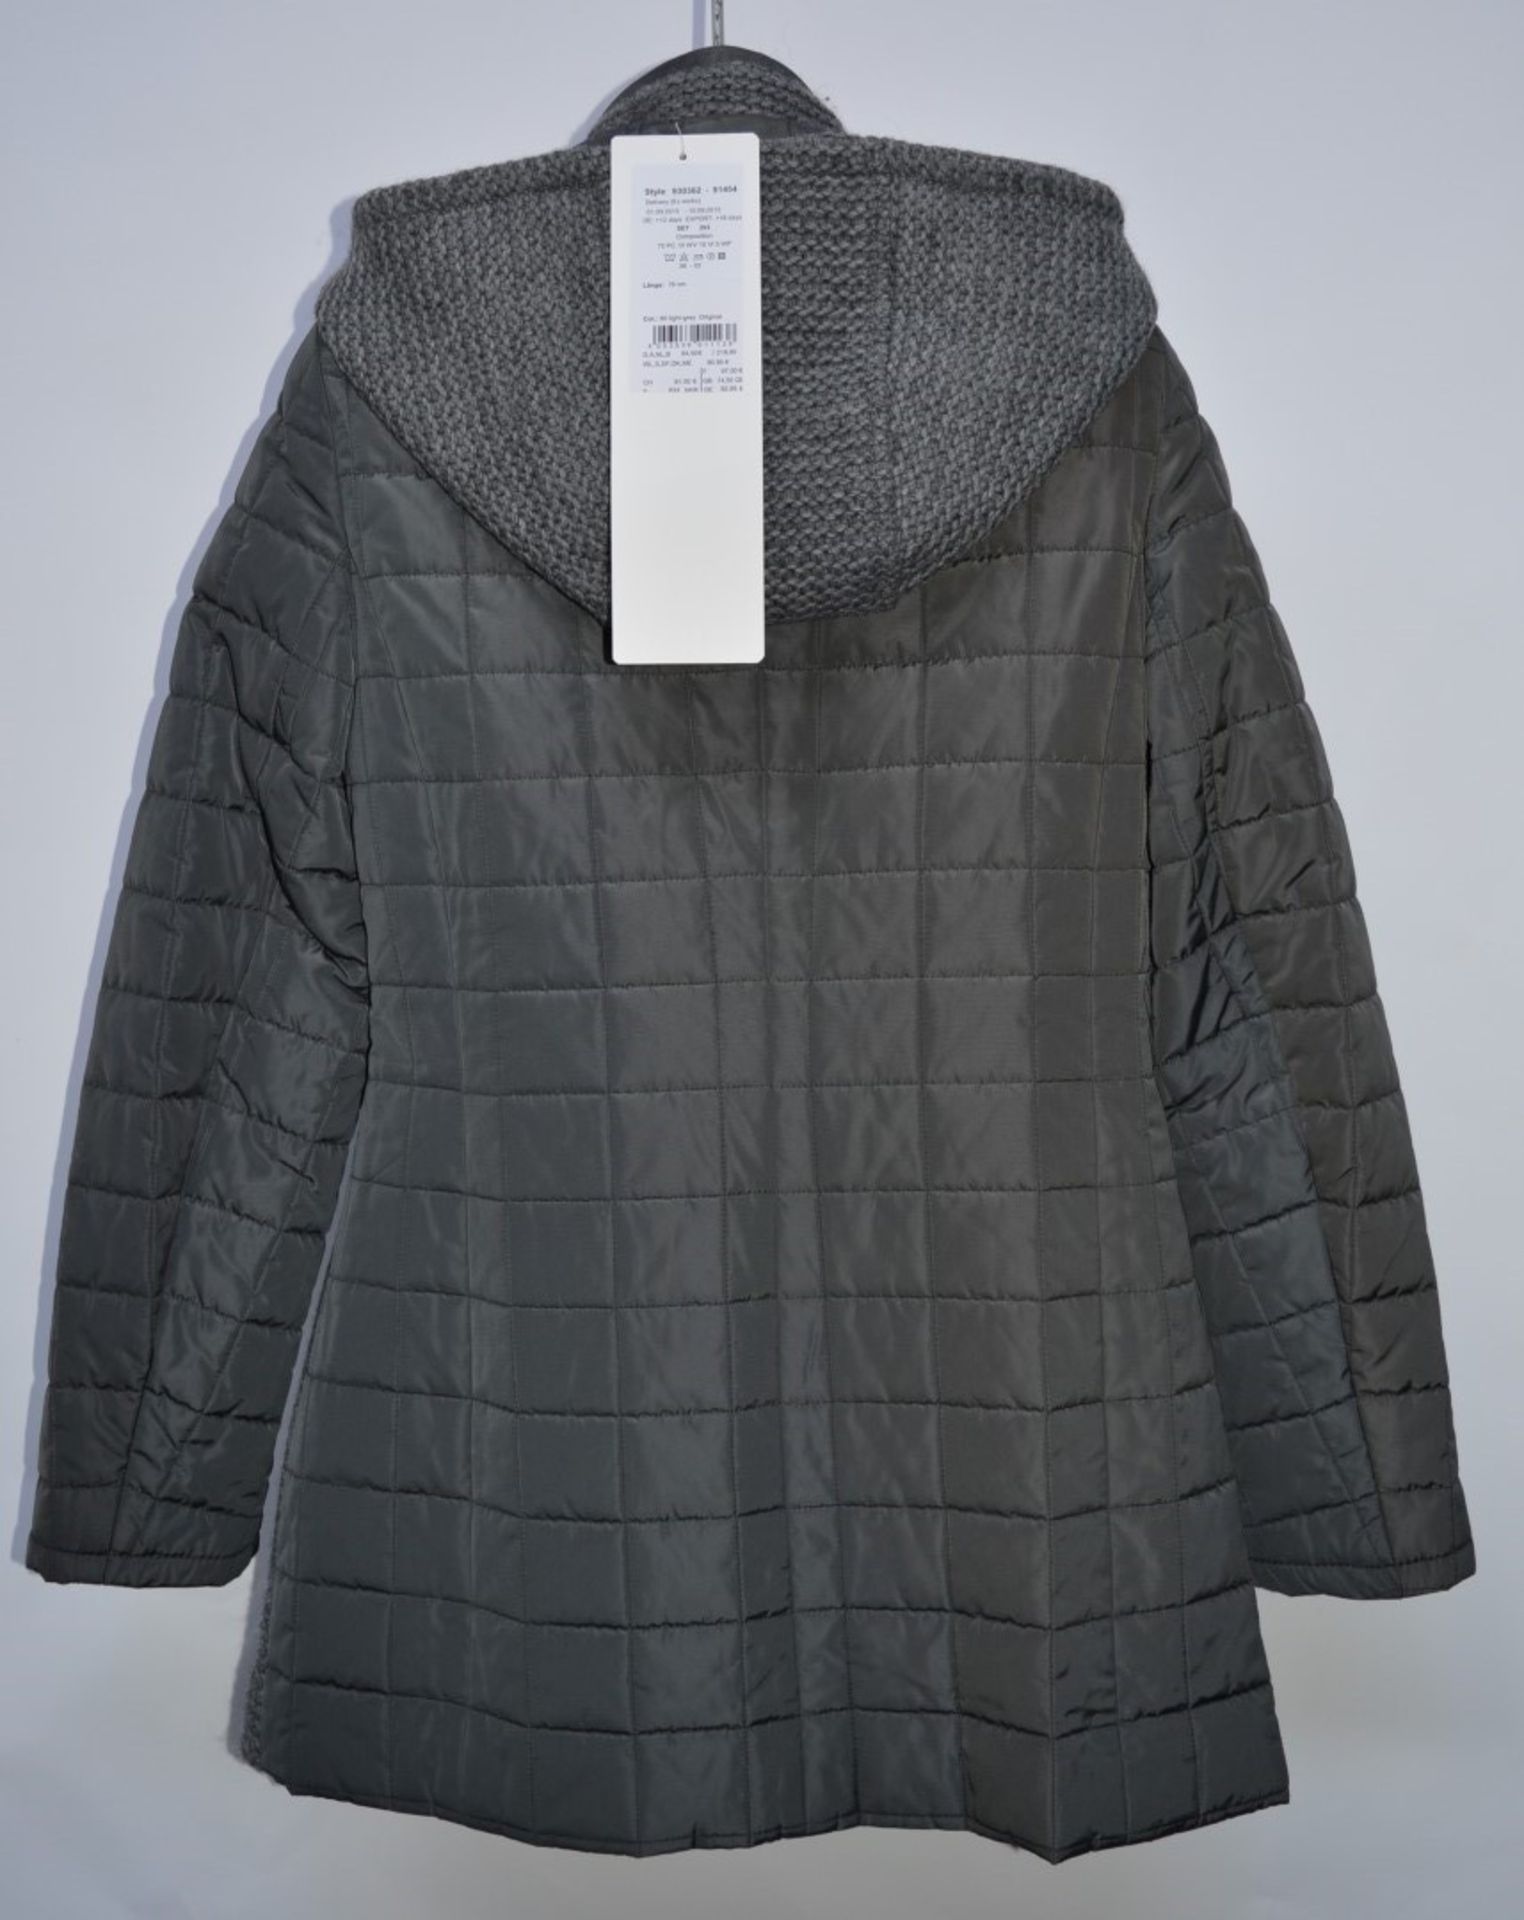 1 x Steilmann Kirsten Womens Coat - 10% Virgin Wool Coat With Functional External and Internal - Image 2 of 15